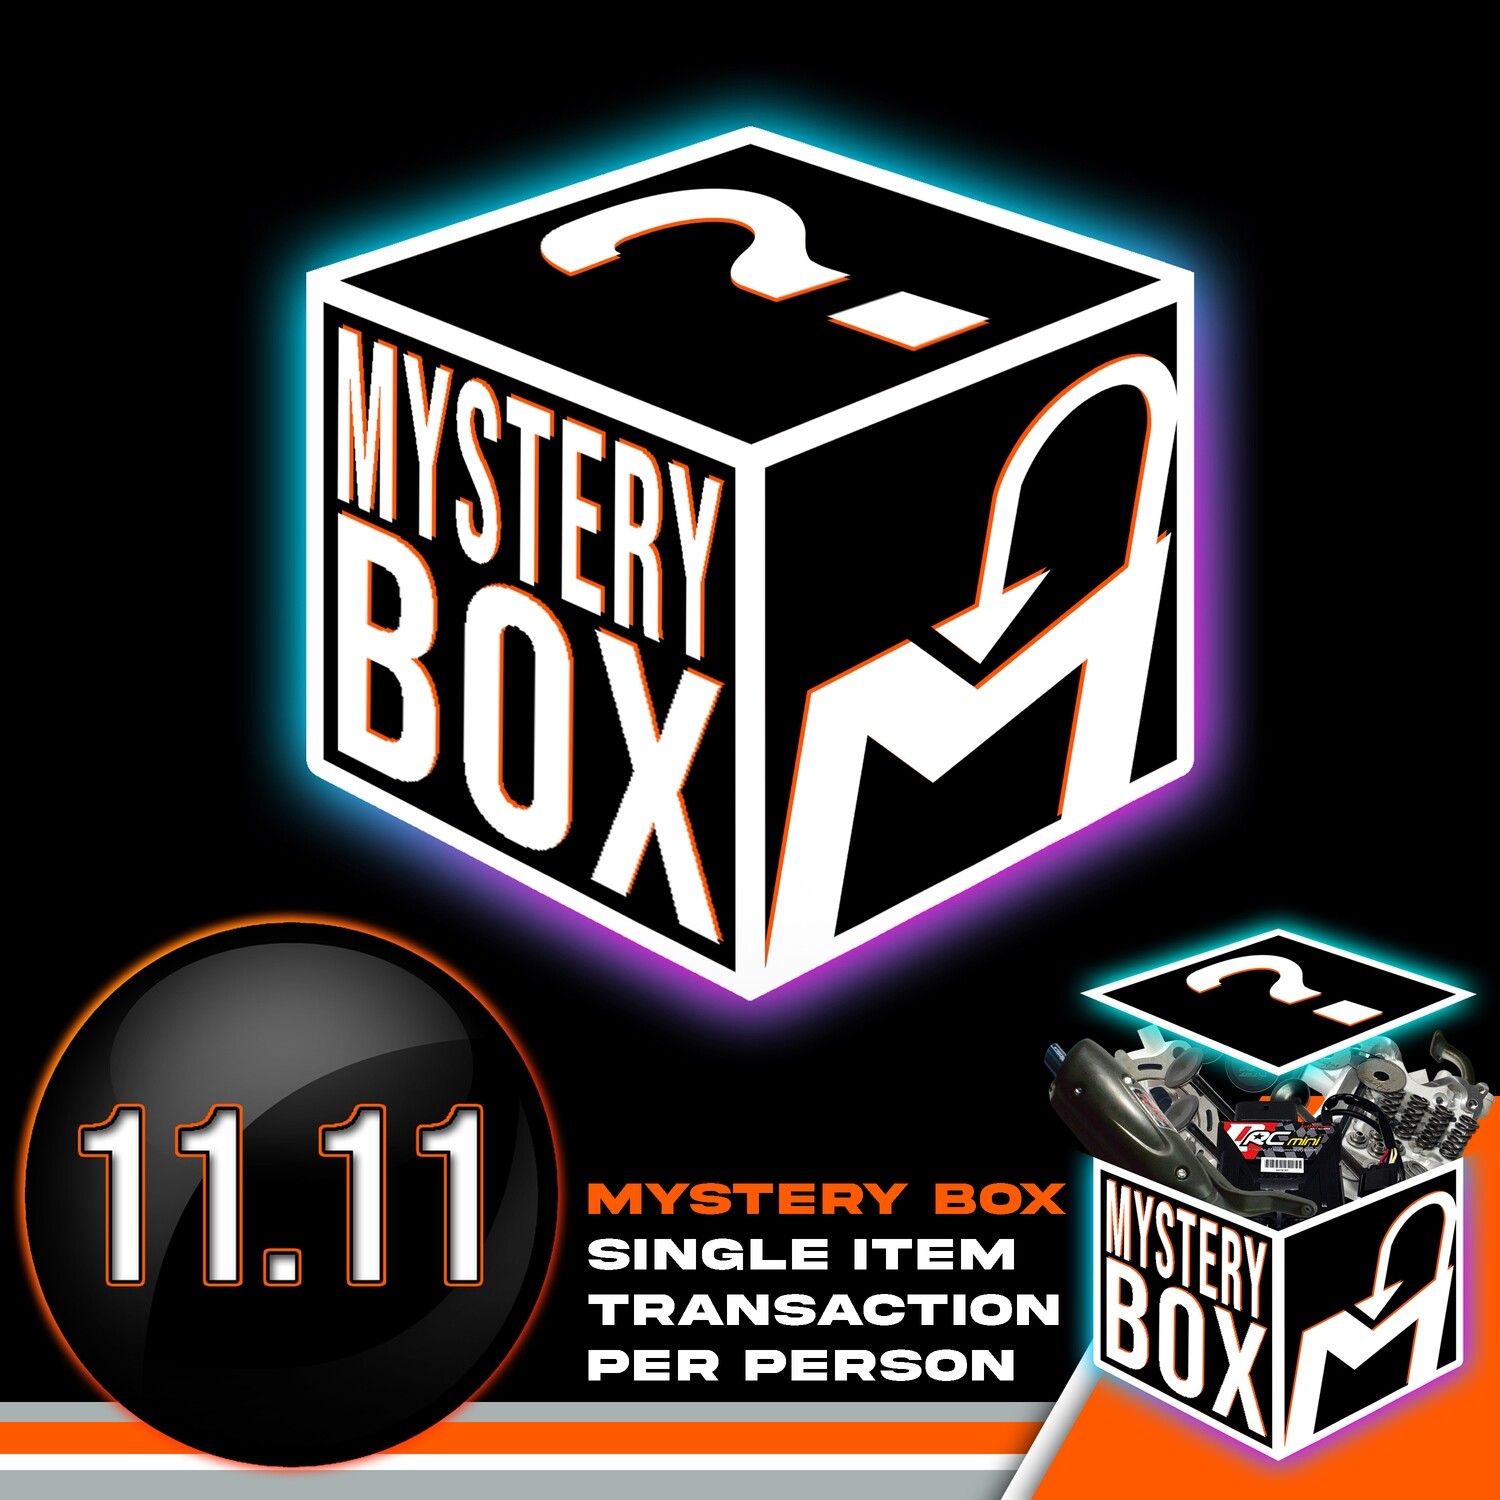 MYSTERY BOX #118 (11.11 PROMO)